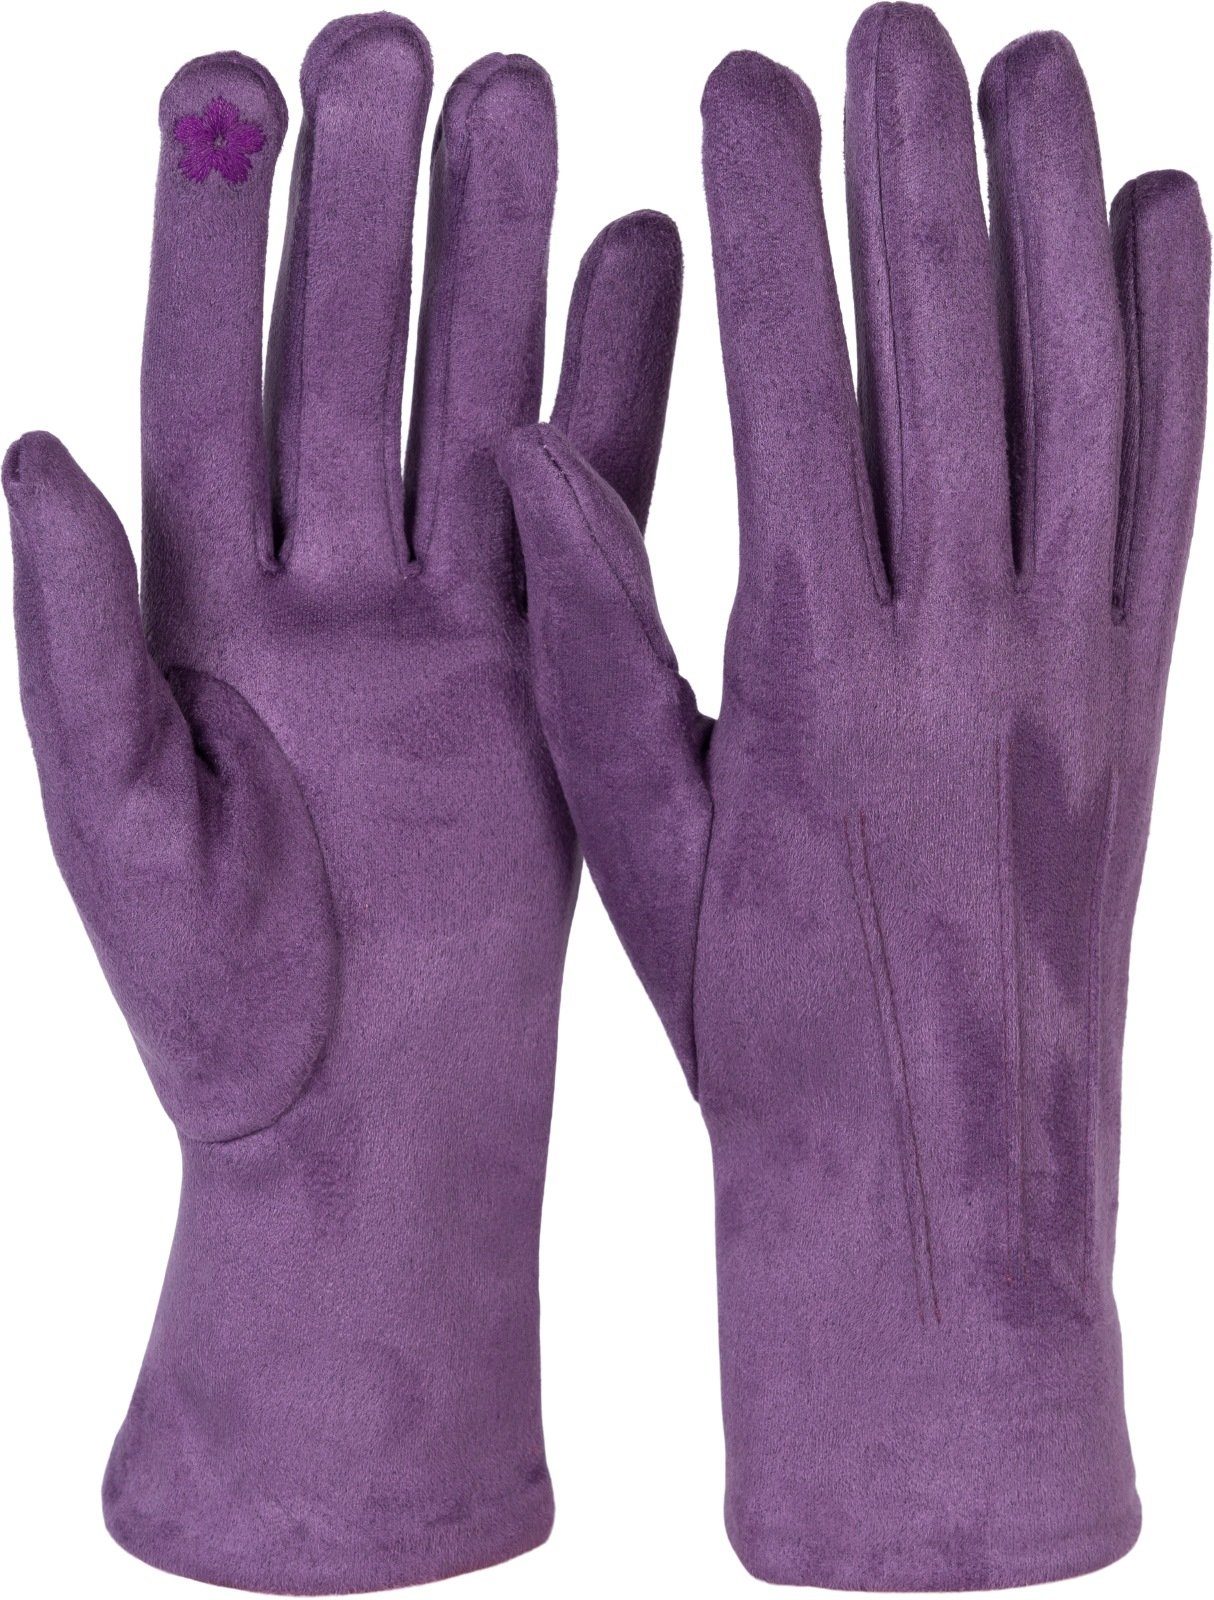 styleBREAKER Fleecehandschuhe Einfarbige Touchscreen Handschuhe Ziernähte Violett